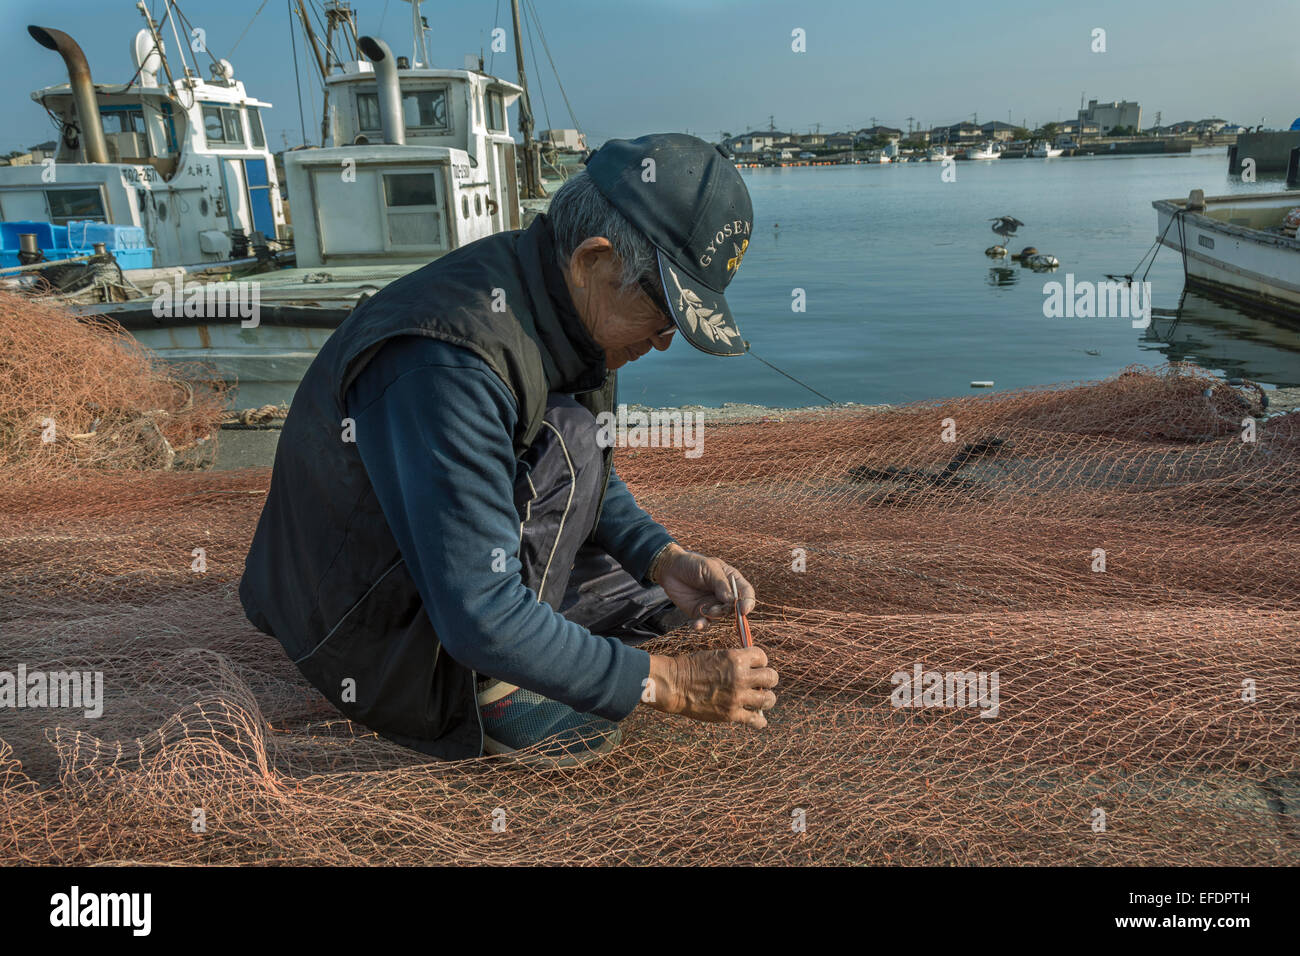 Old man repairing fishing nets by hand, Naruto Harbor, Shikoku Island, Japan Stock Photo